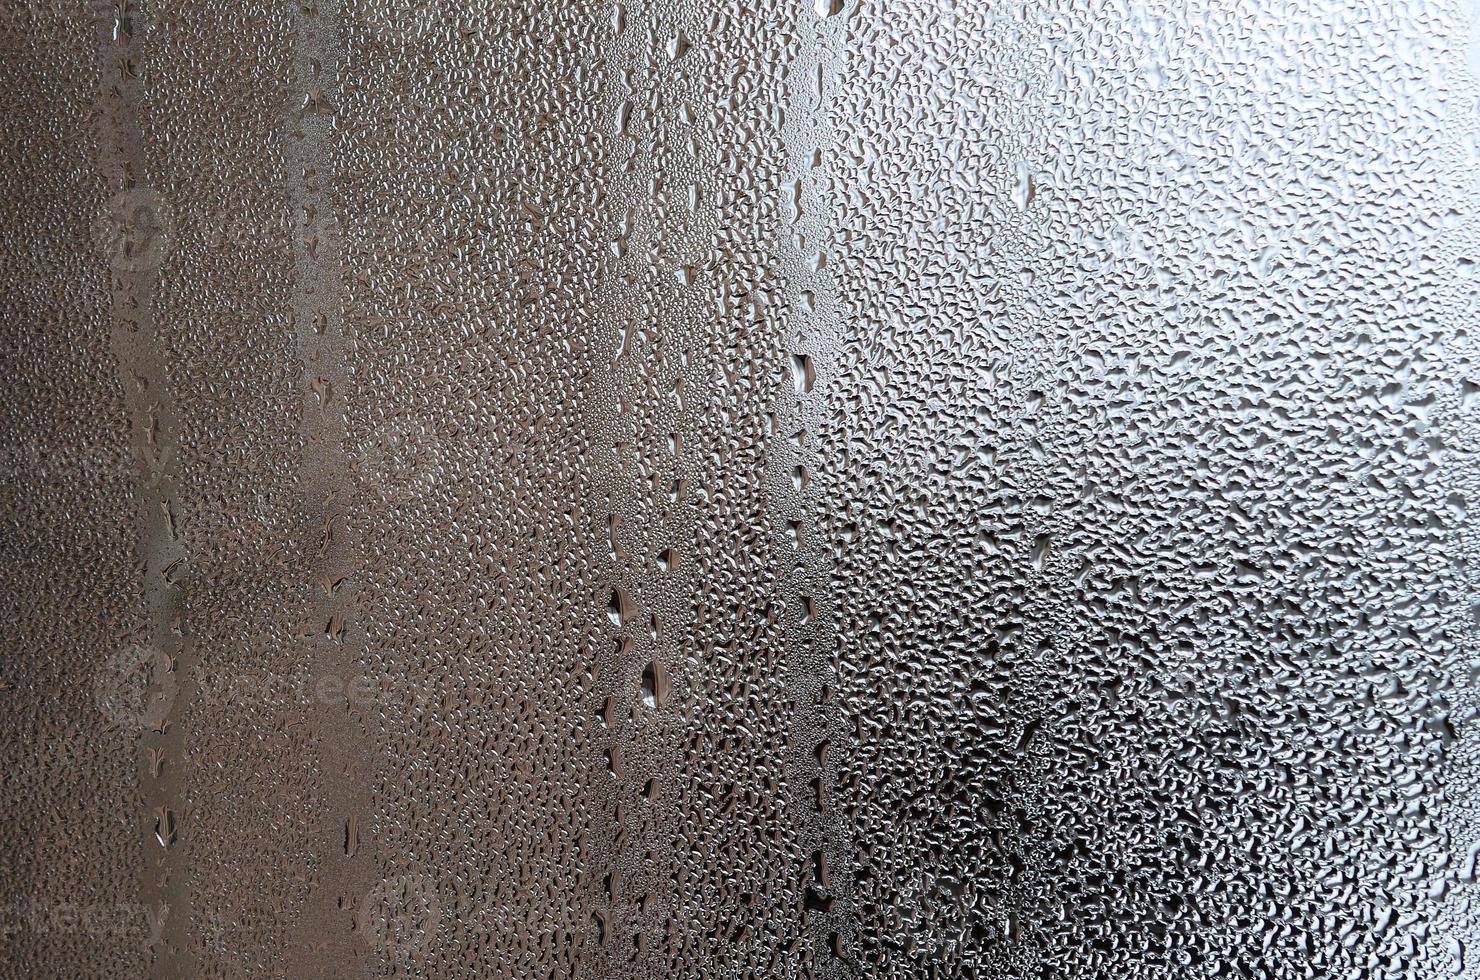 textura de una gota de lluvia sobre un fondo transparente húmedo de vidrio. tonificado en color gris foto